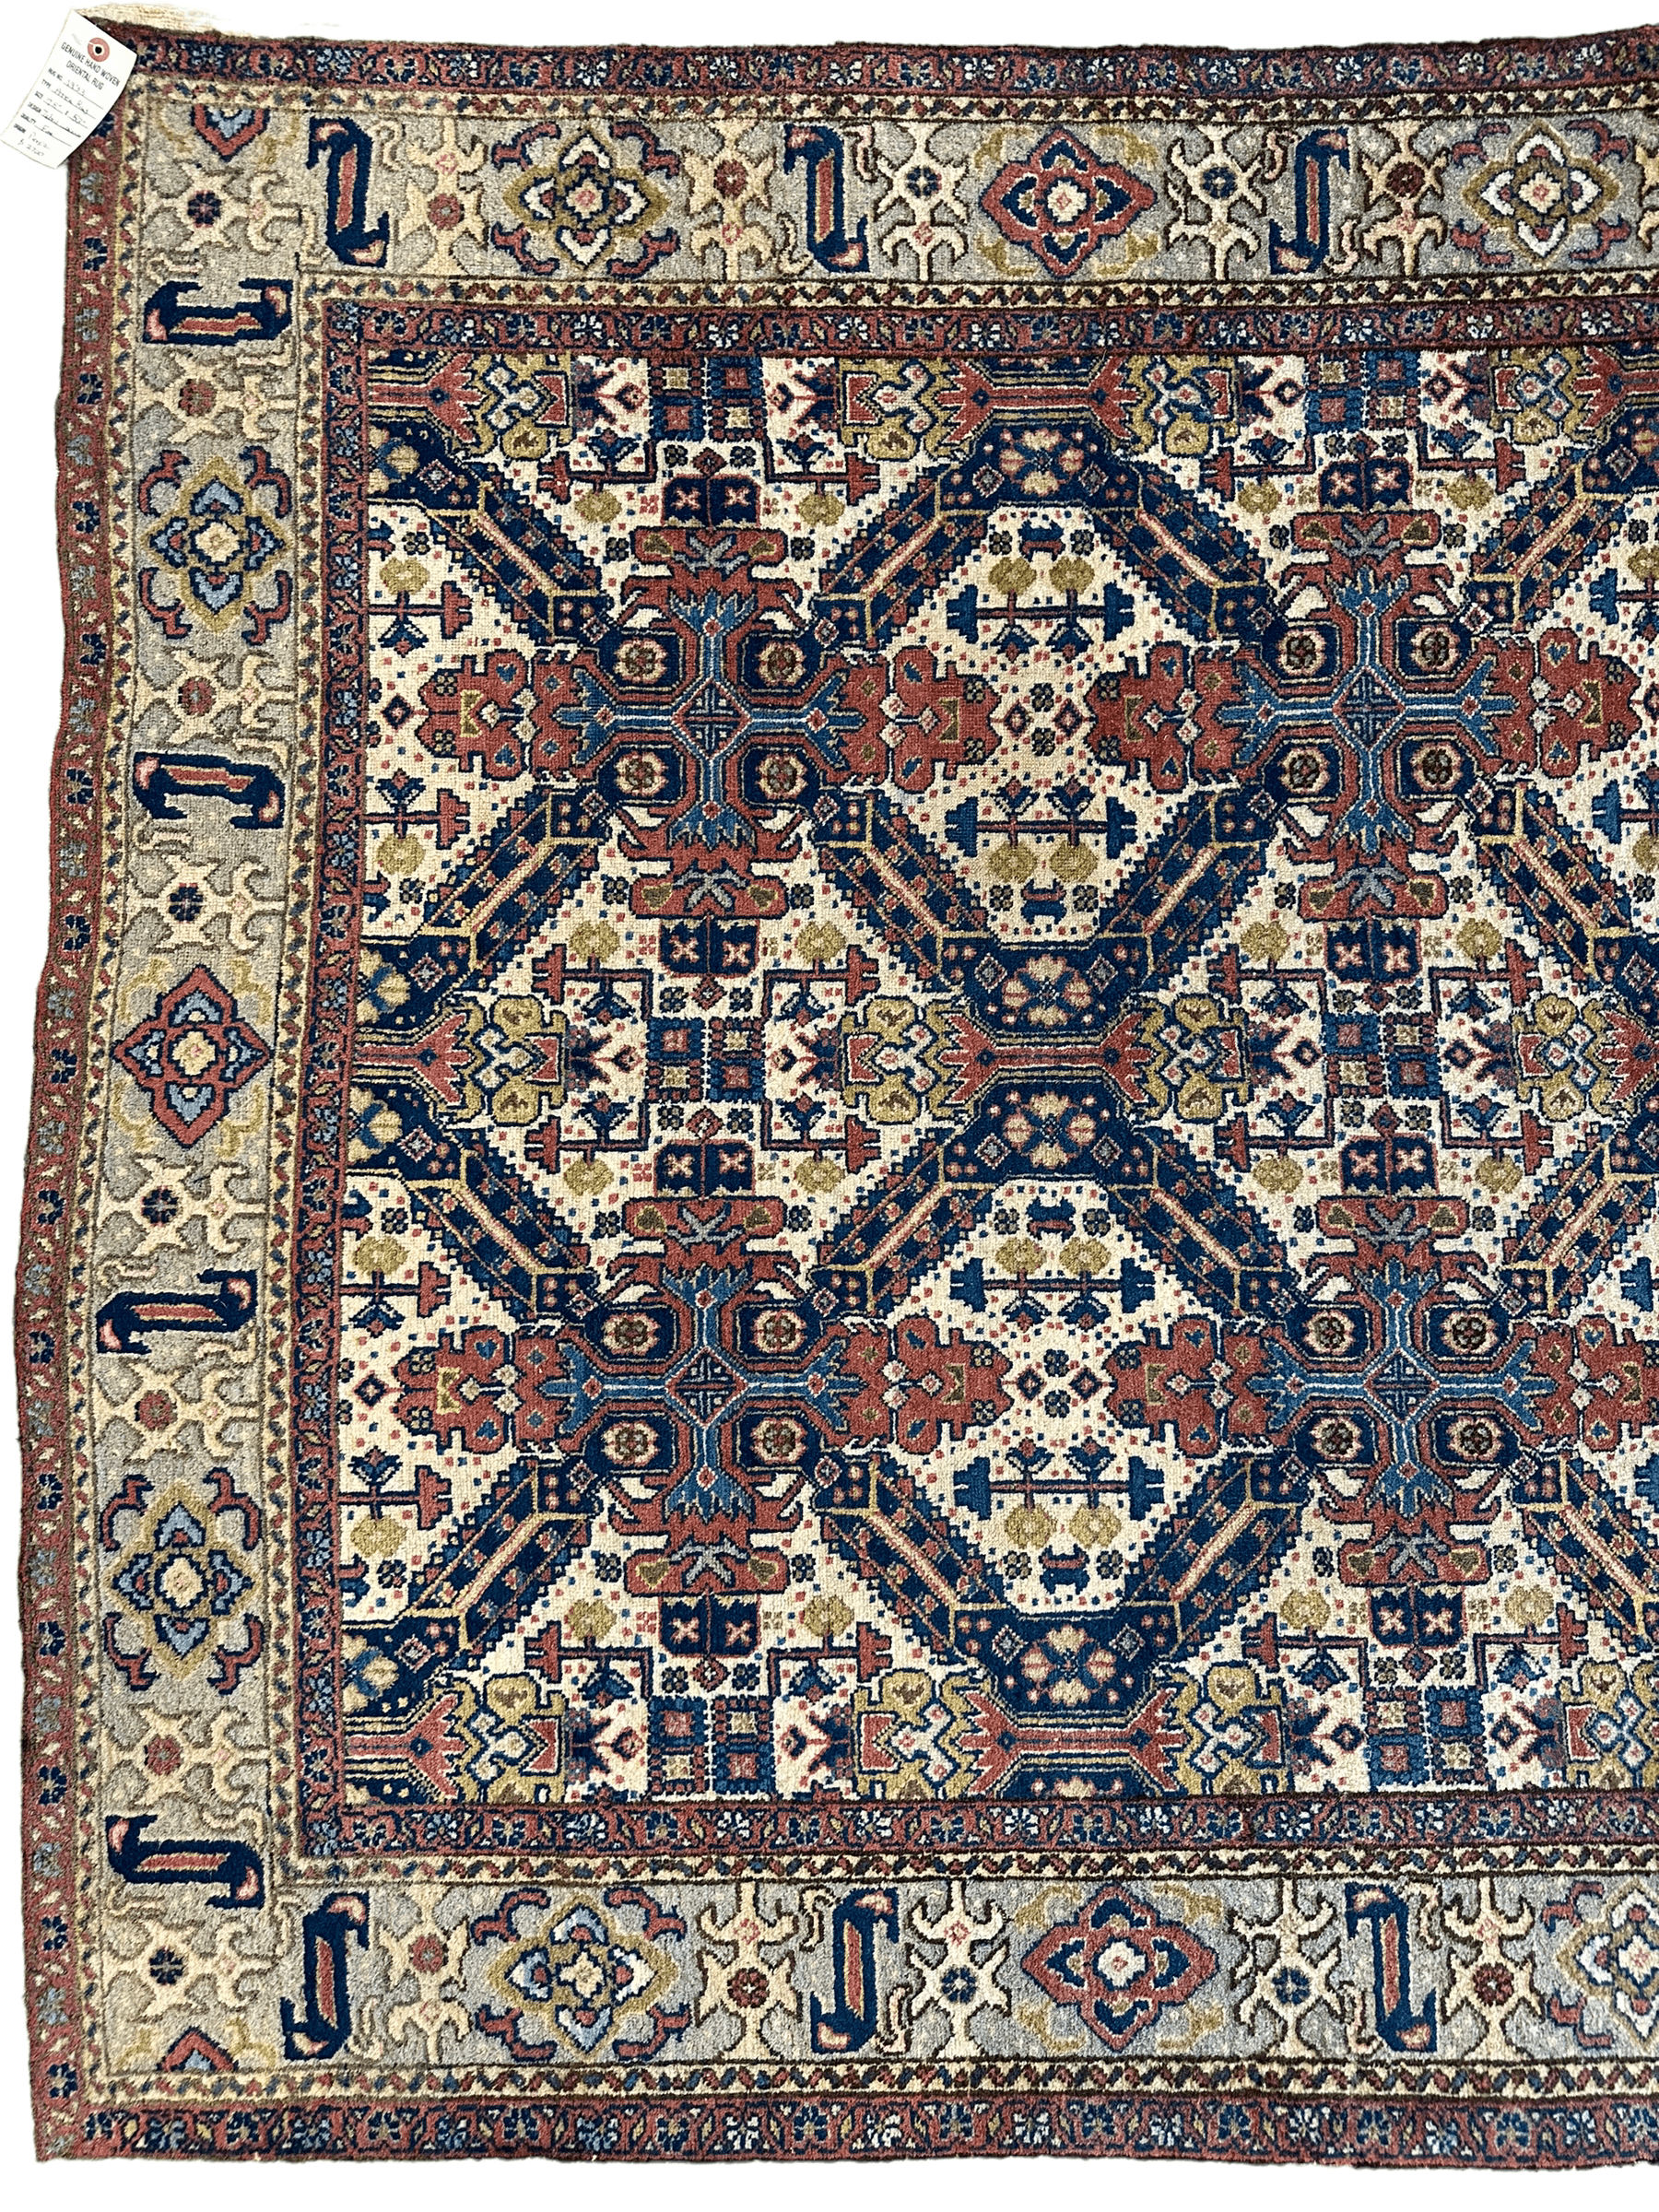 Handmade One-of-a-Kind Persian Tabriz Wool Rug - 5’3” x 7’8”